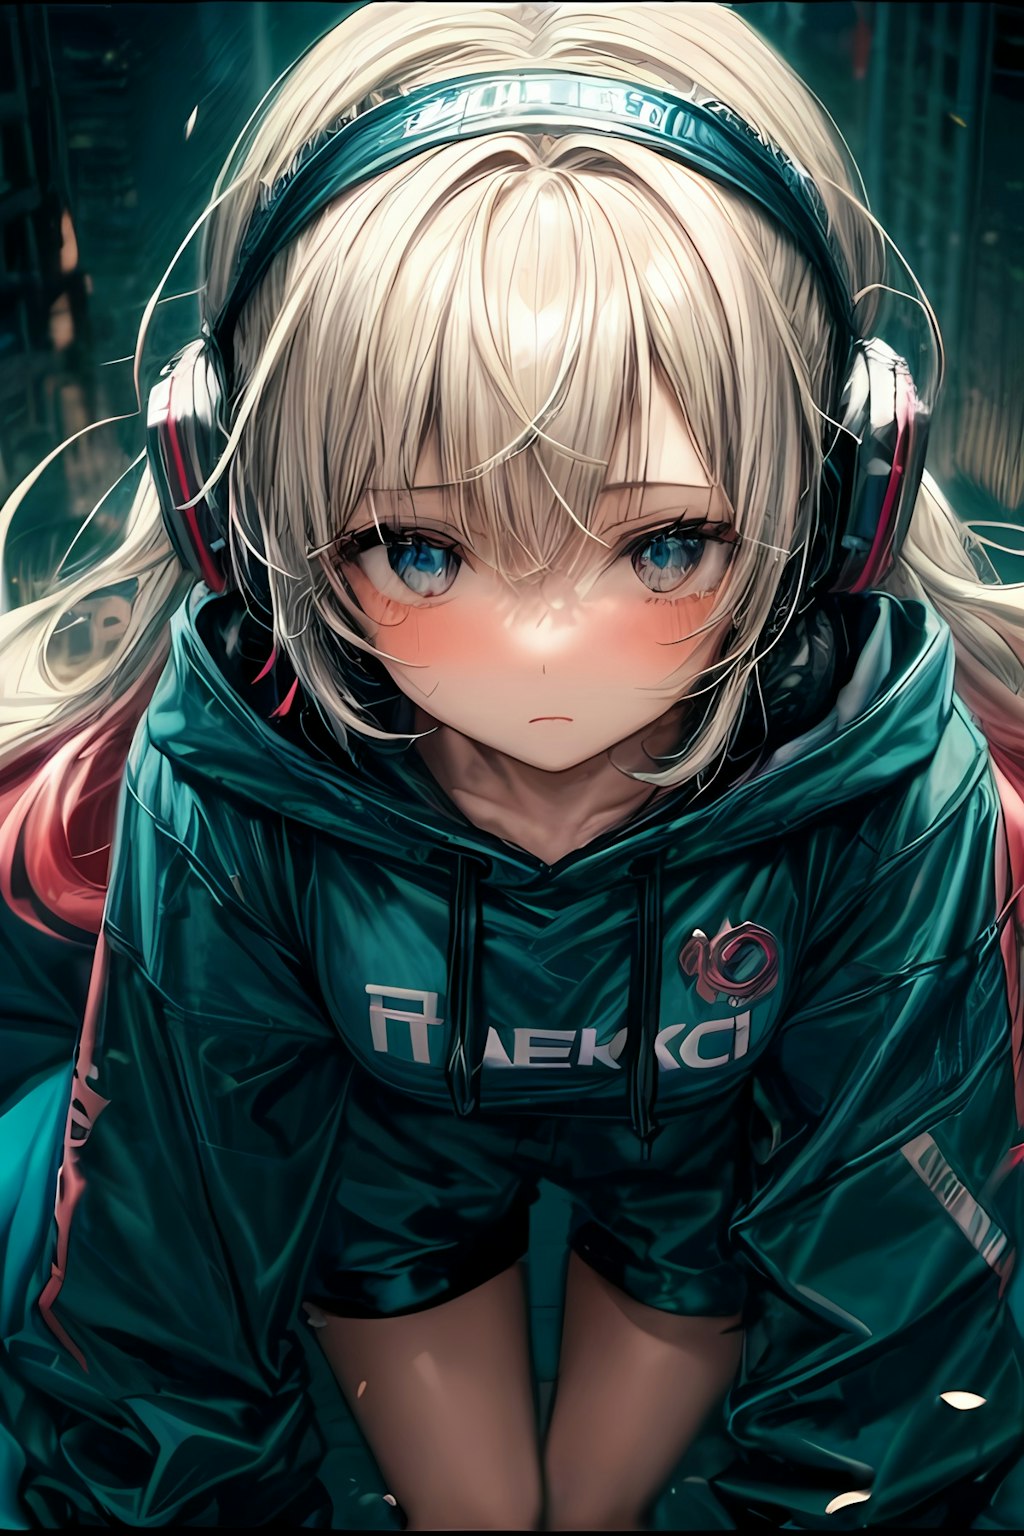 Neo Osaka Headphone Girl 21